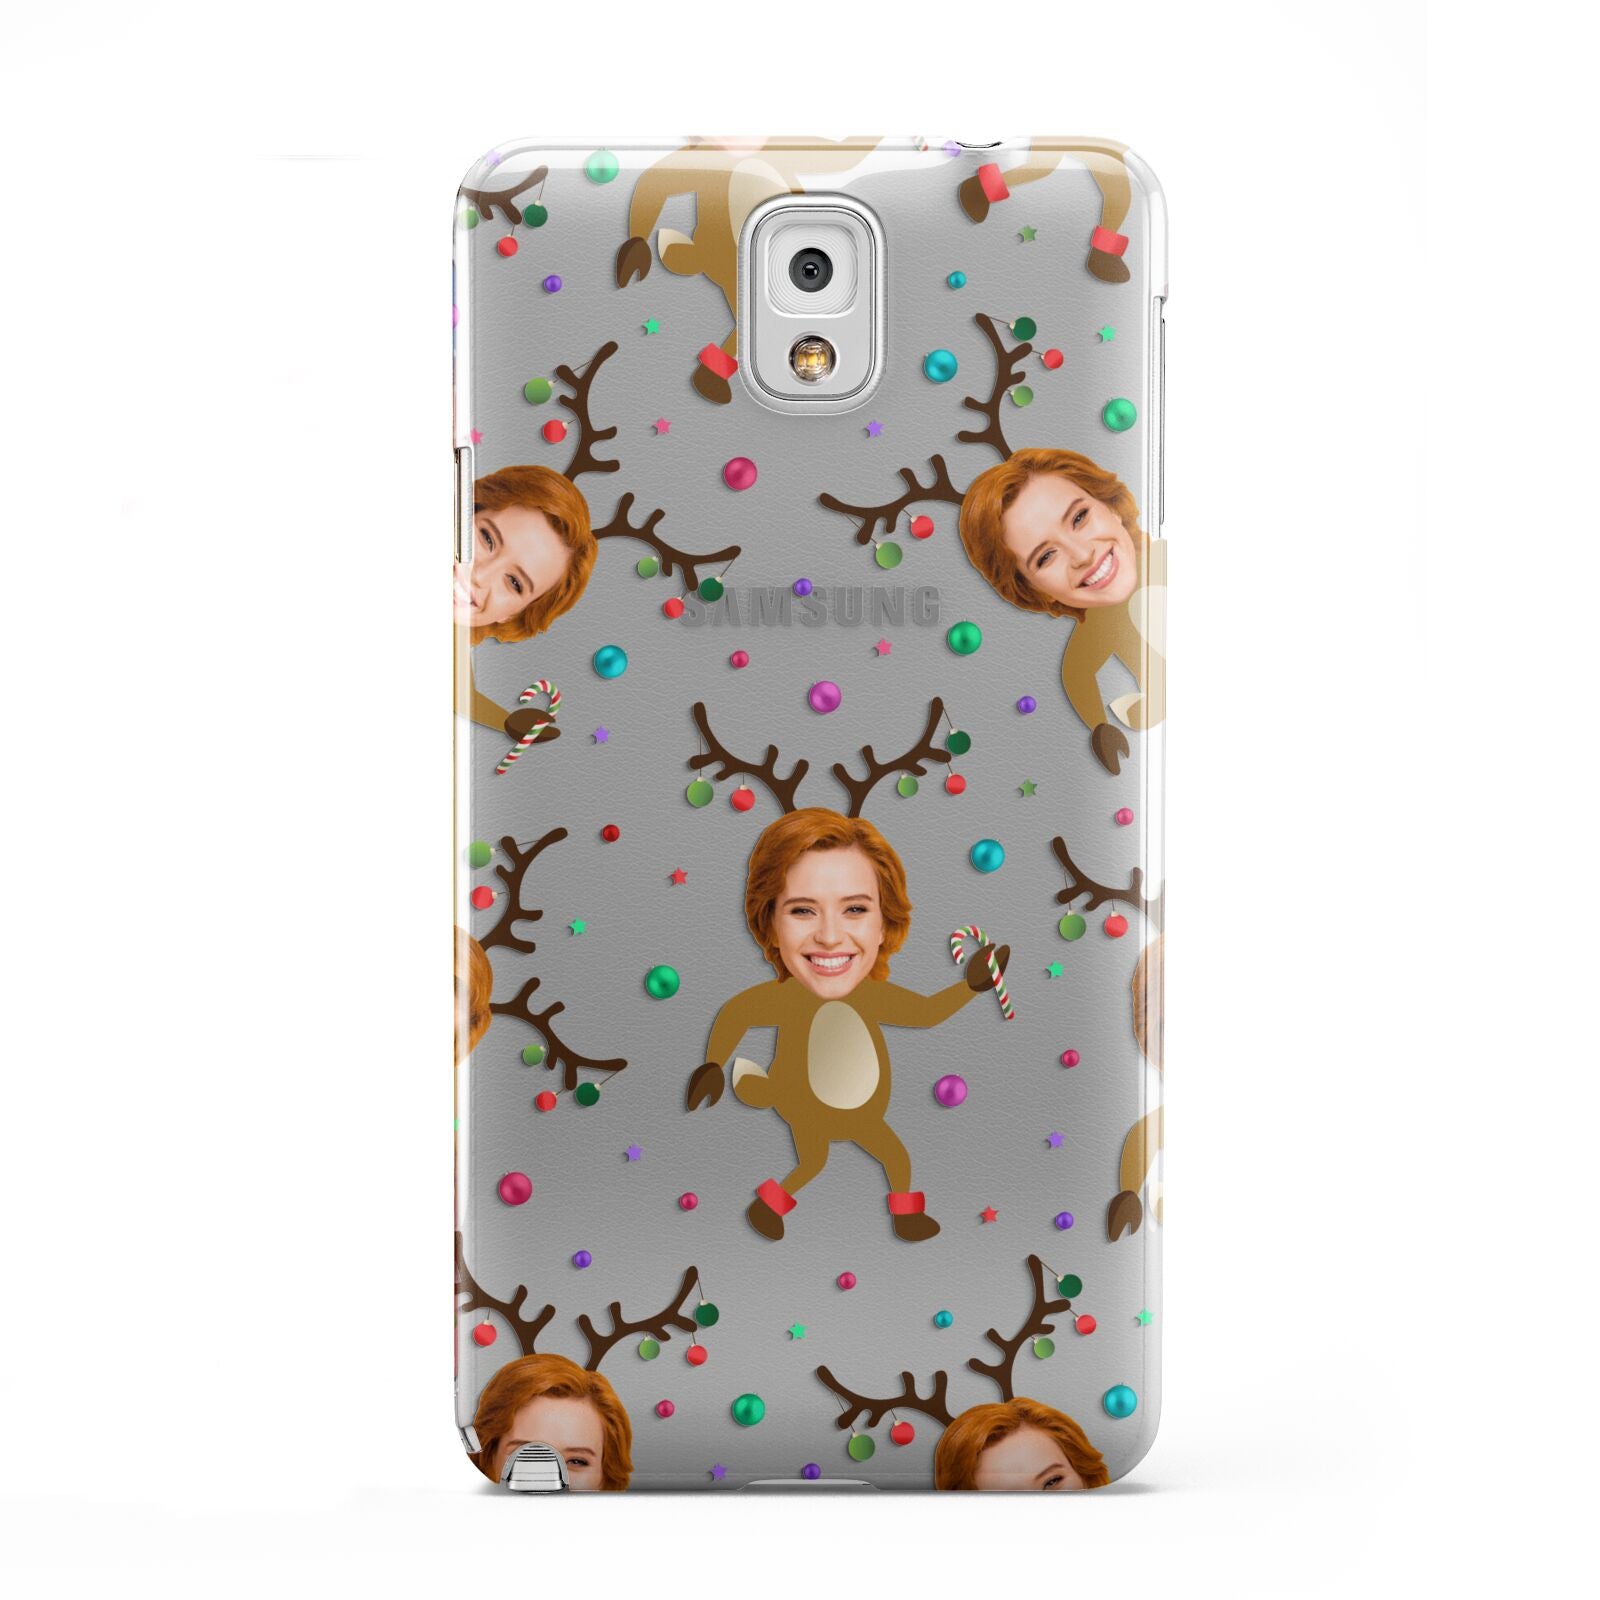 Reindeer Photo Face Samsung Galaxy Note 3 Case